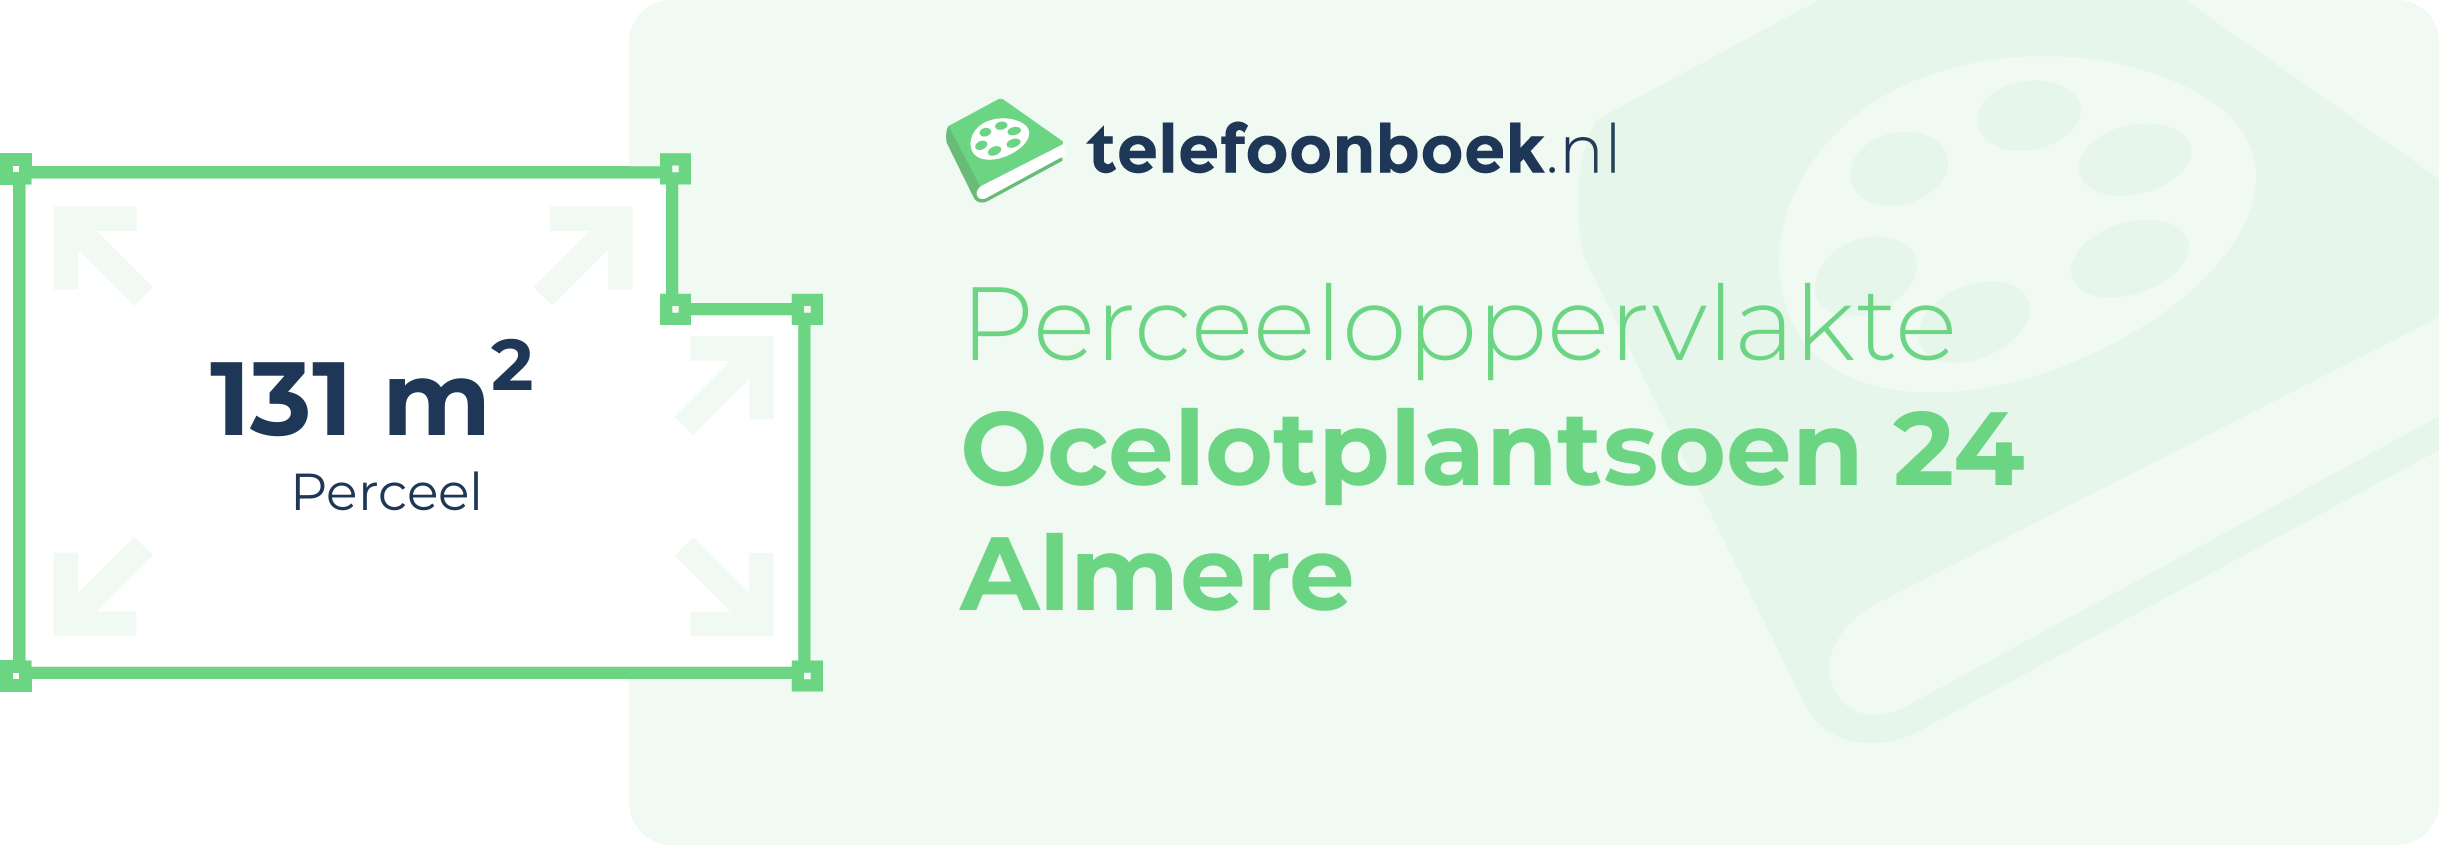 Perceeloppervlakte Ocelotplantsoen 24 Almere